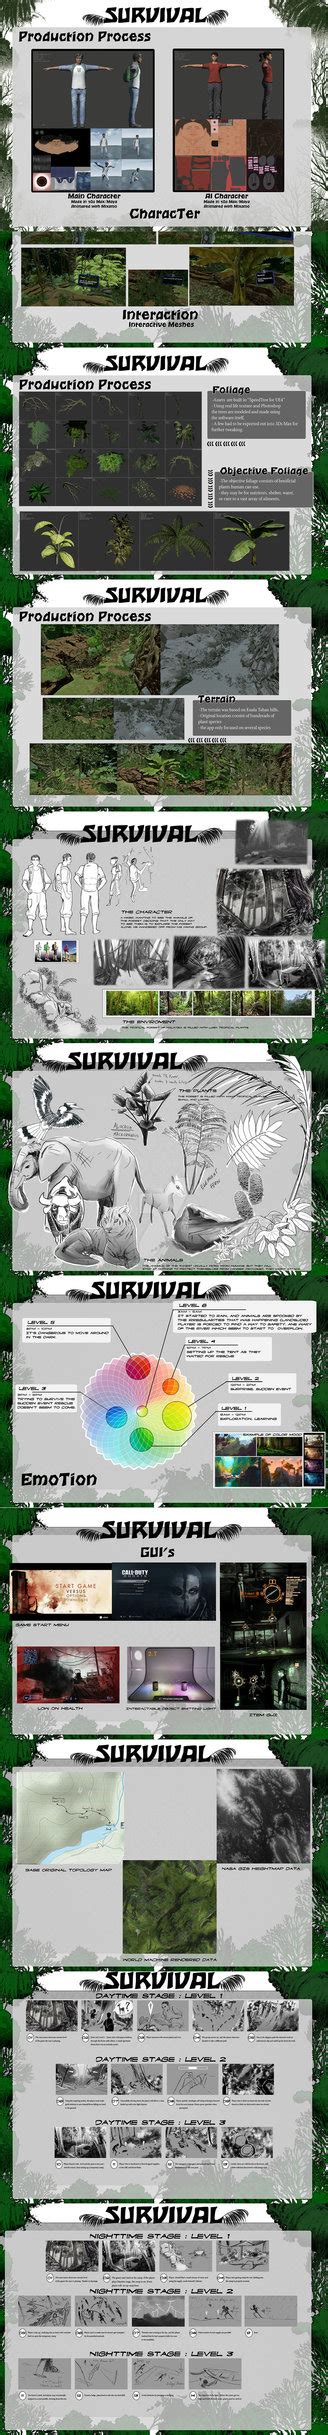 Survive Productionboard Survival Deviantart Artist